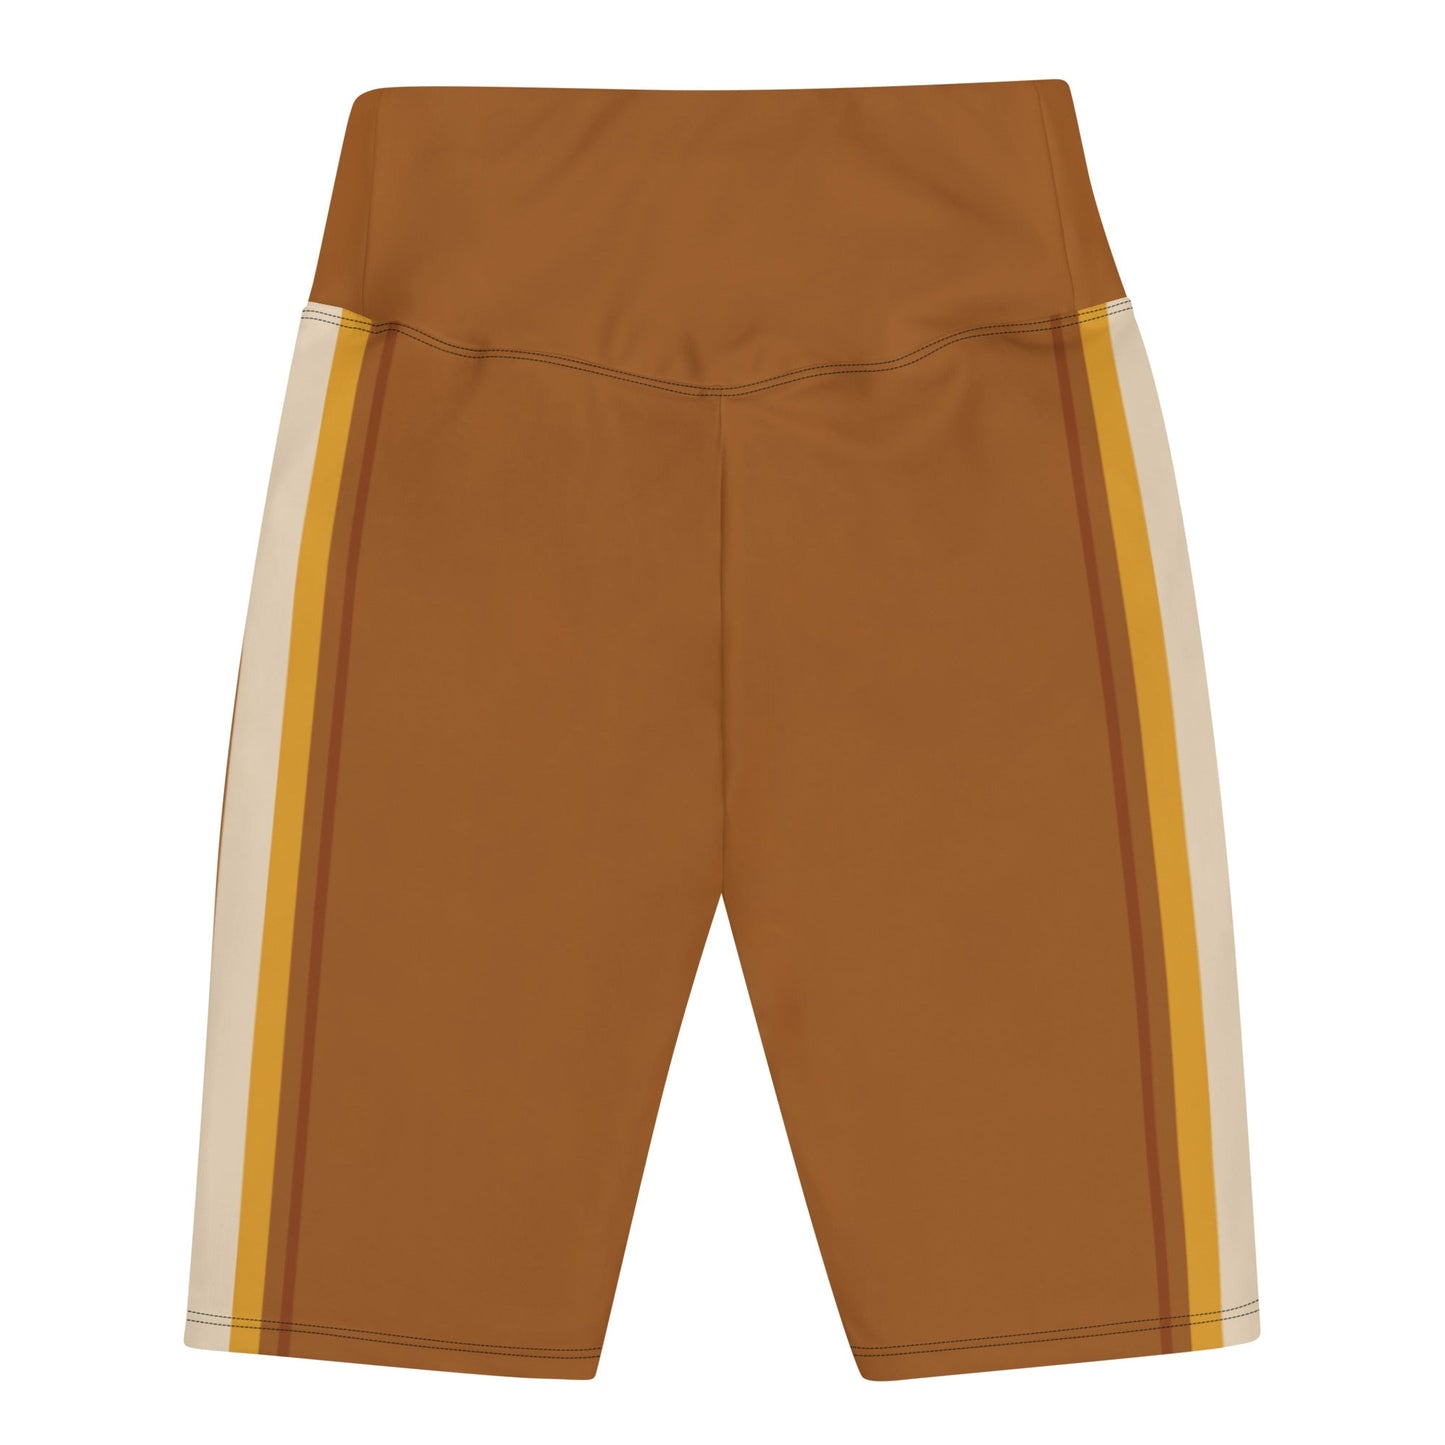 Clay Earth Stripe Bike Shorts with Pocket - Appalachian Bittersweet - Shorts